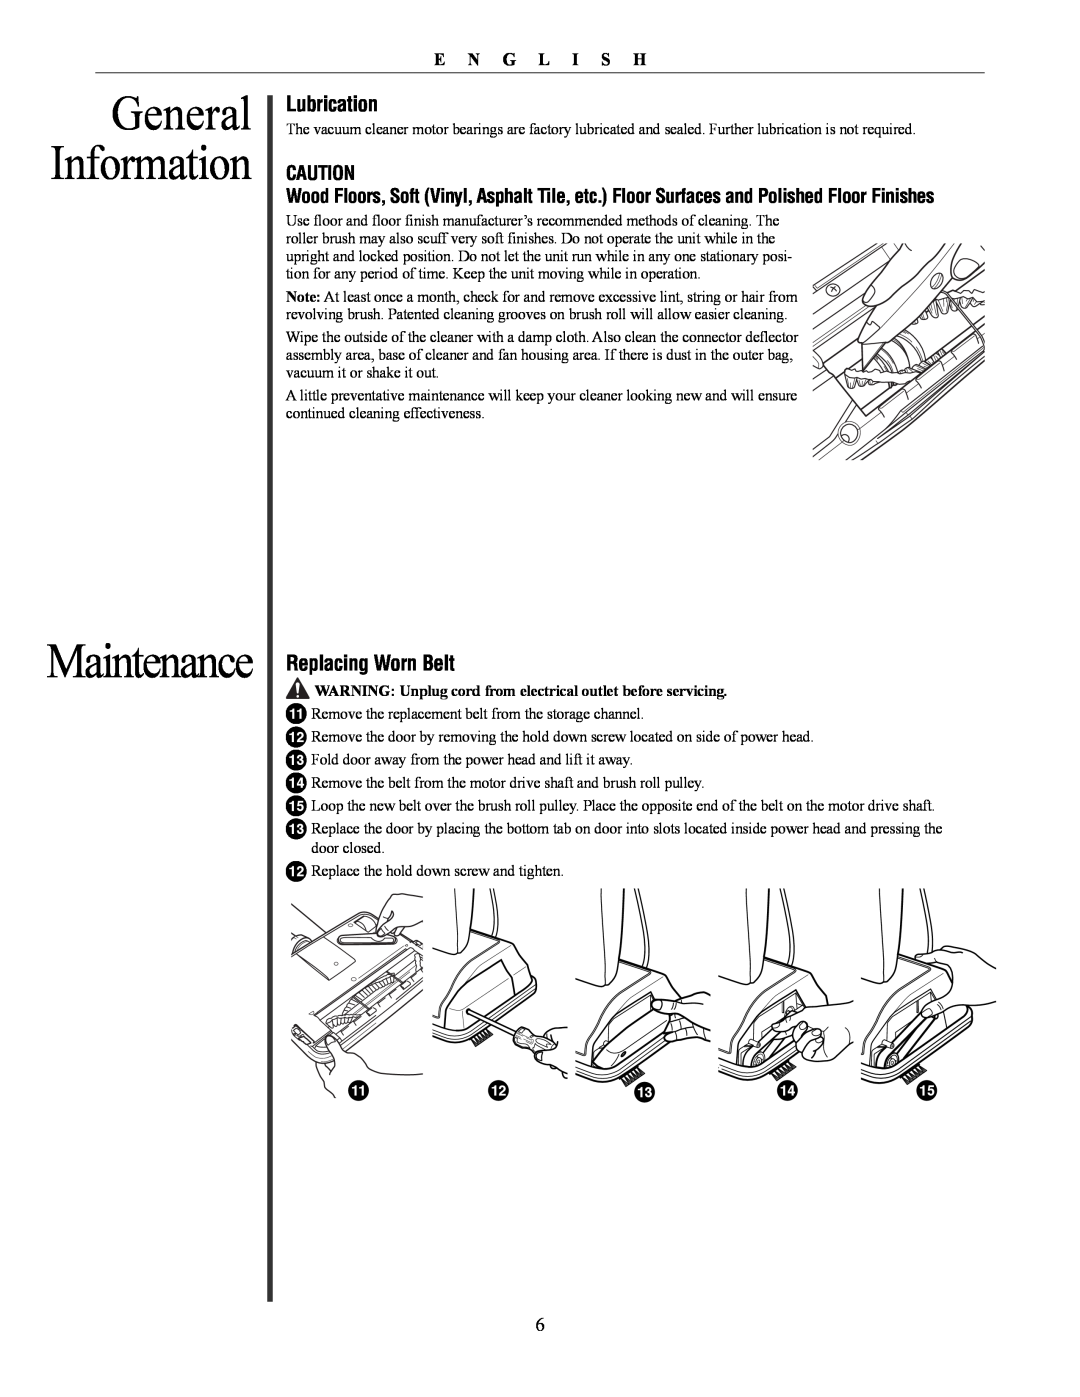 Oreck David manual Maintenance, General Information, Lubrication, Replacing Worn Belt, E N G L I S H 